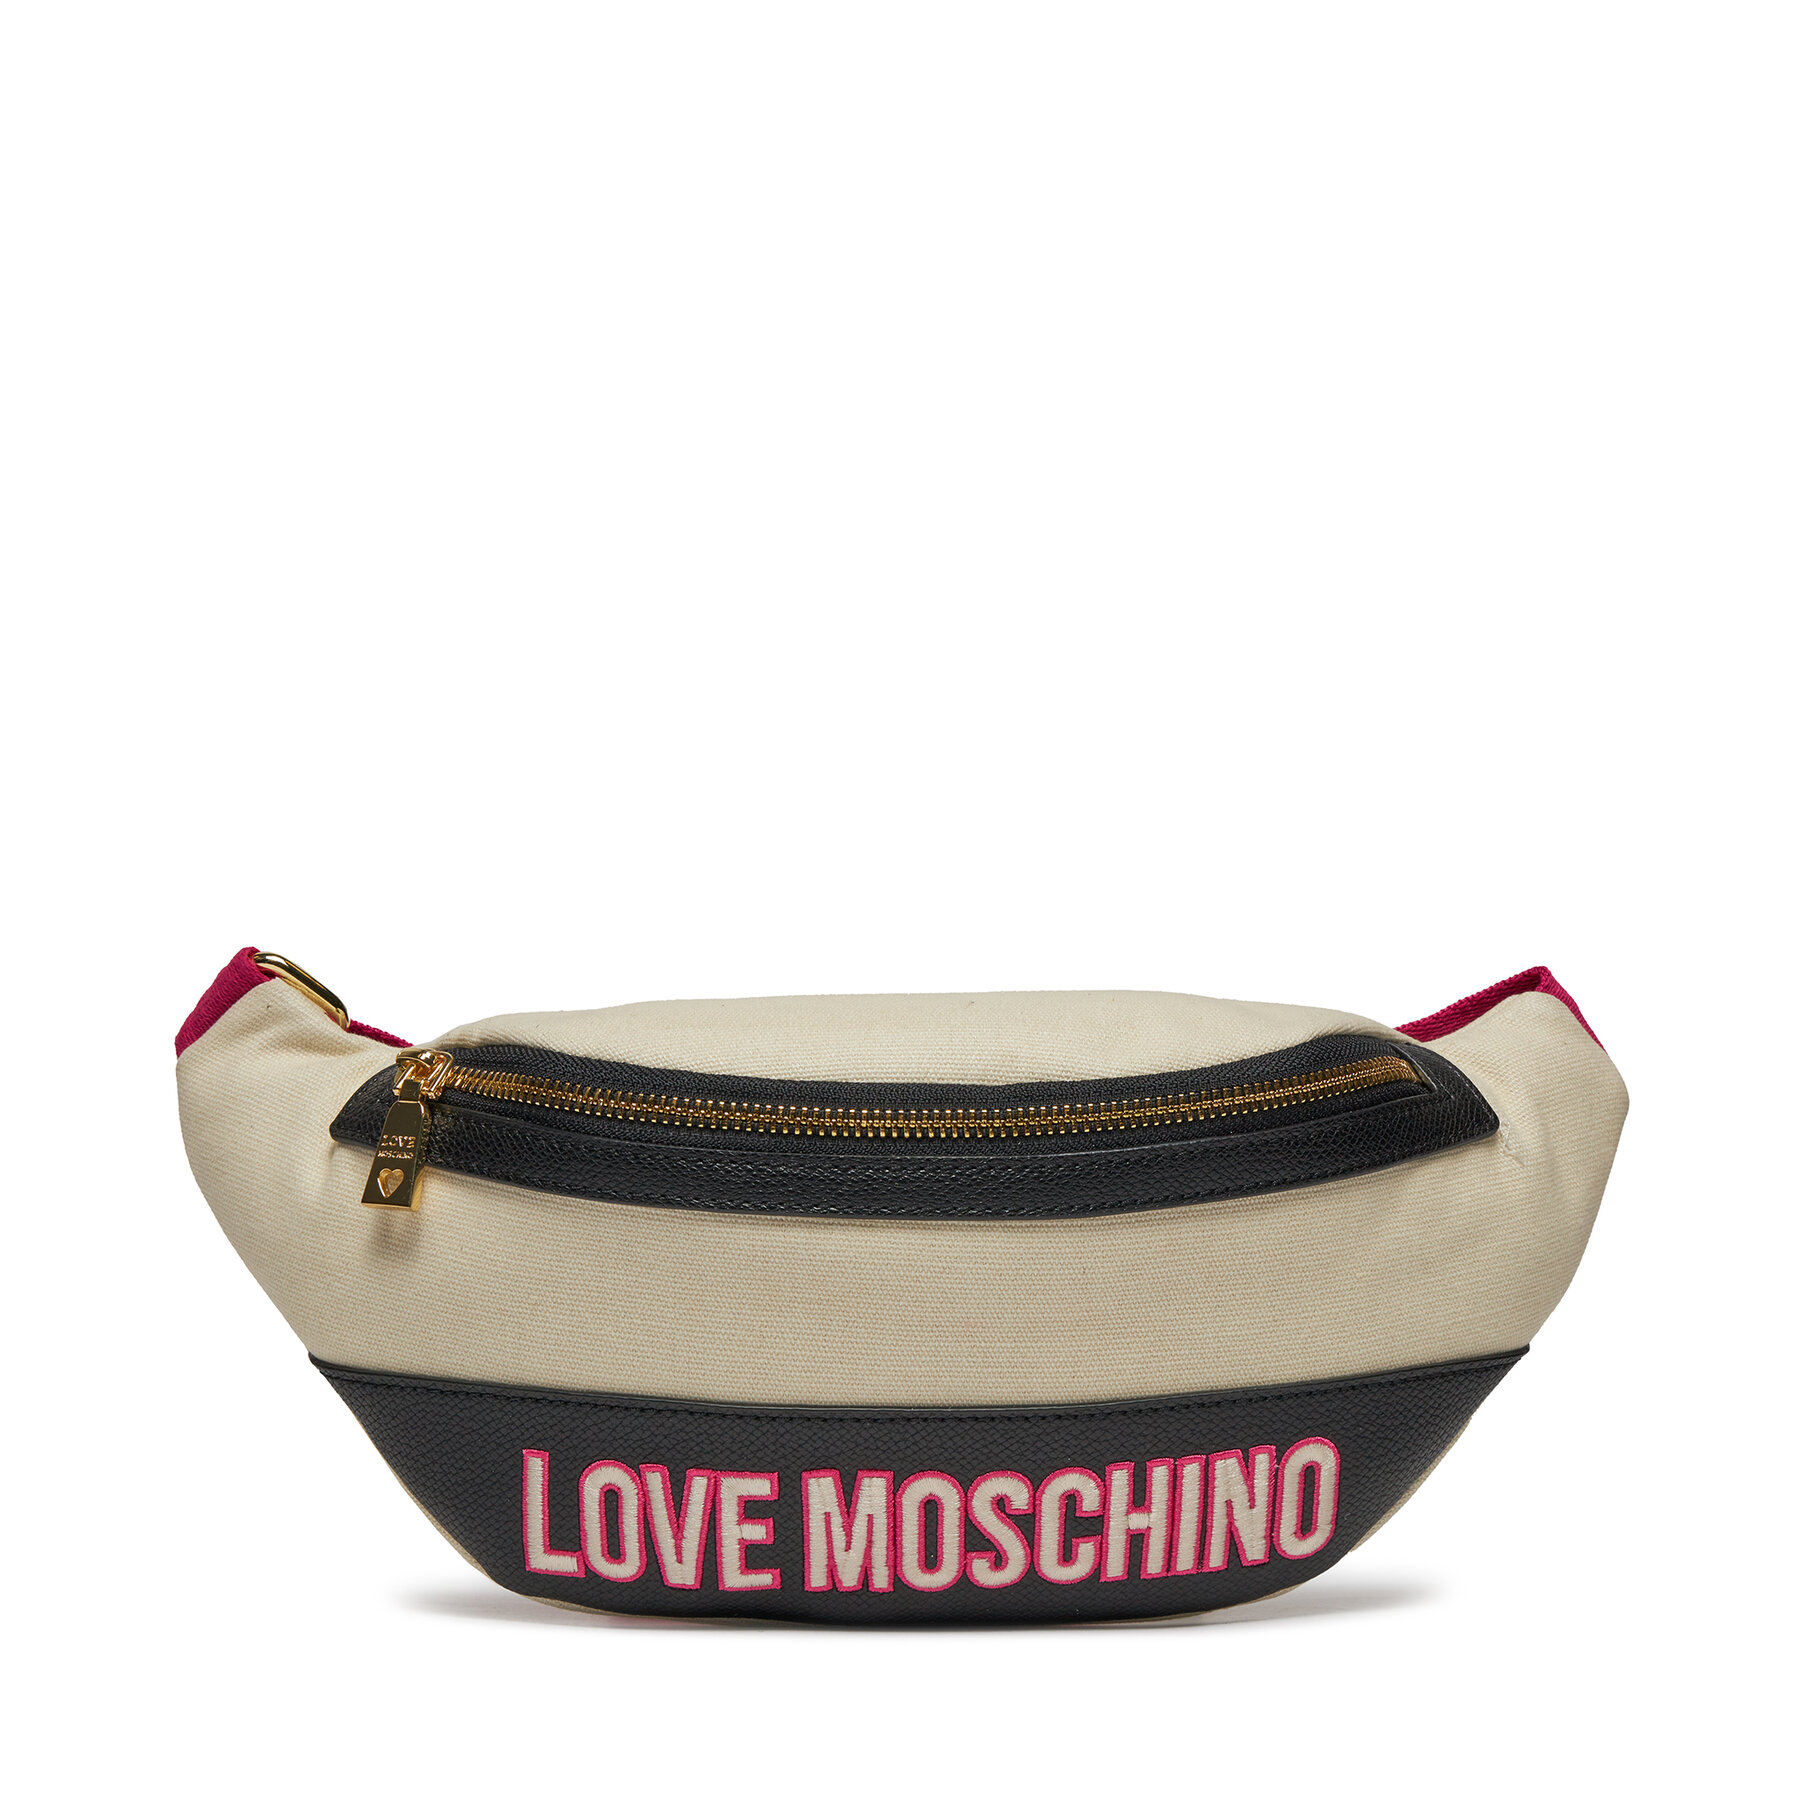 Handtasche LOVE MOSCHINO JC4040PP1ILF110B Natur/Nero/Fuxia von Love Moschino